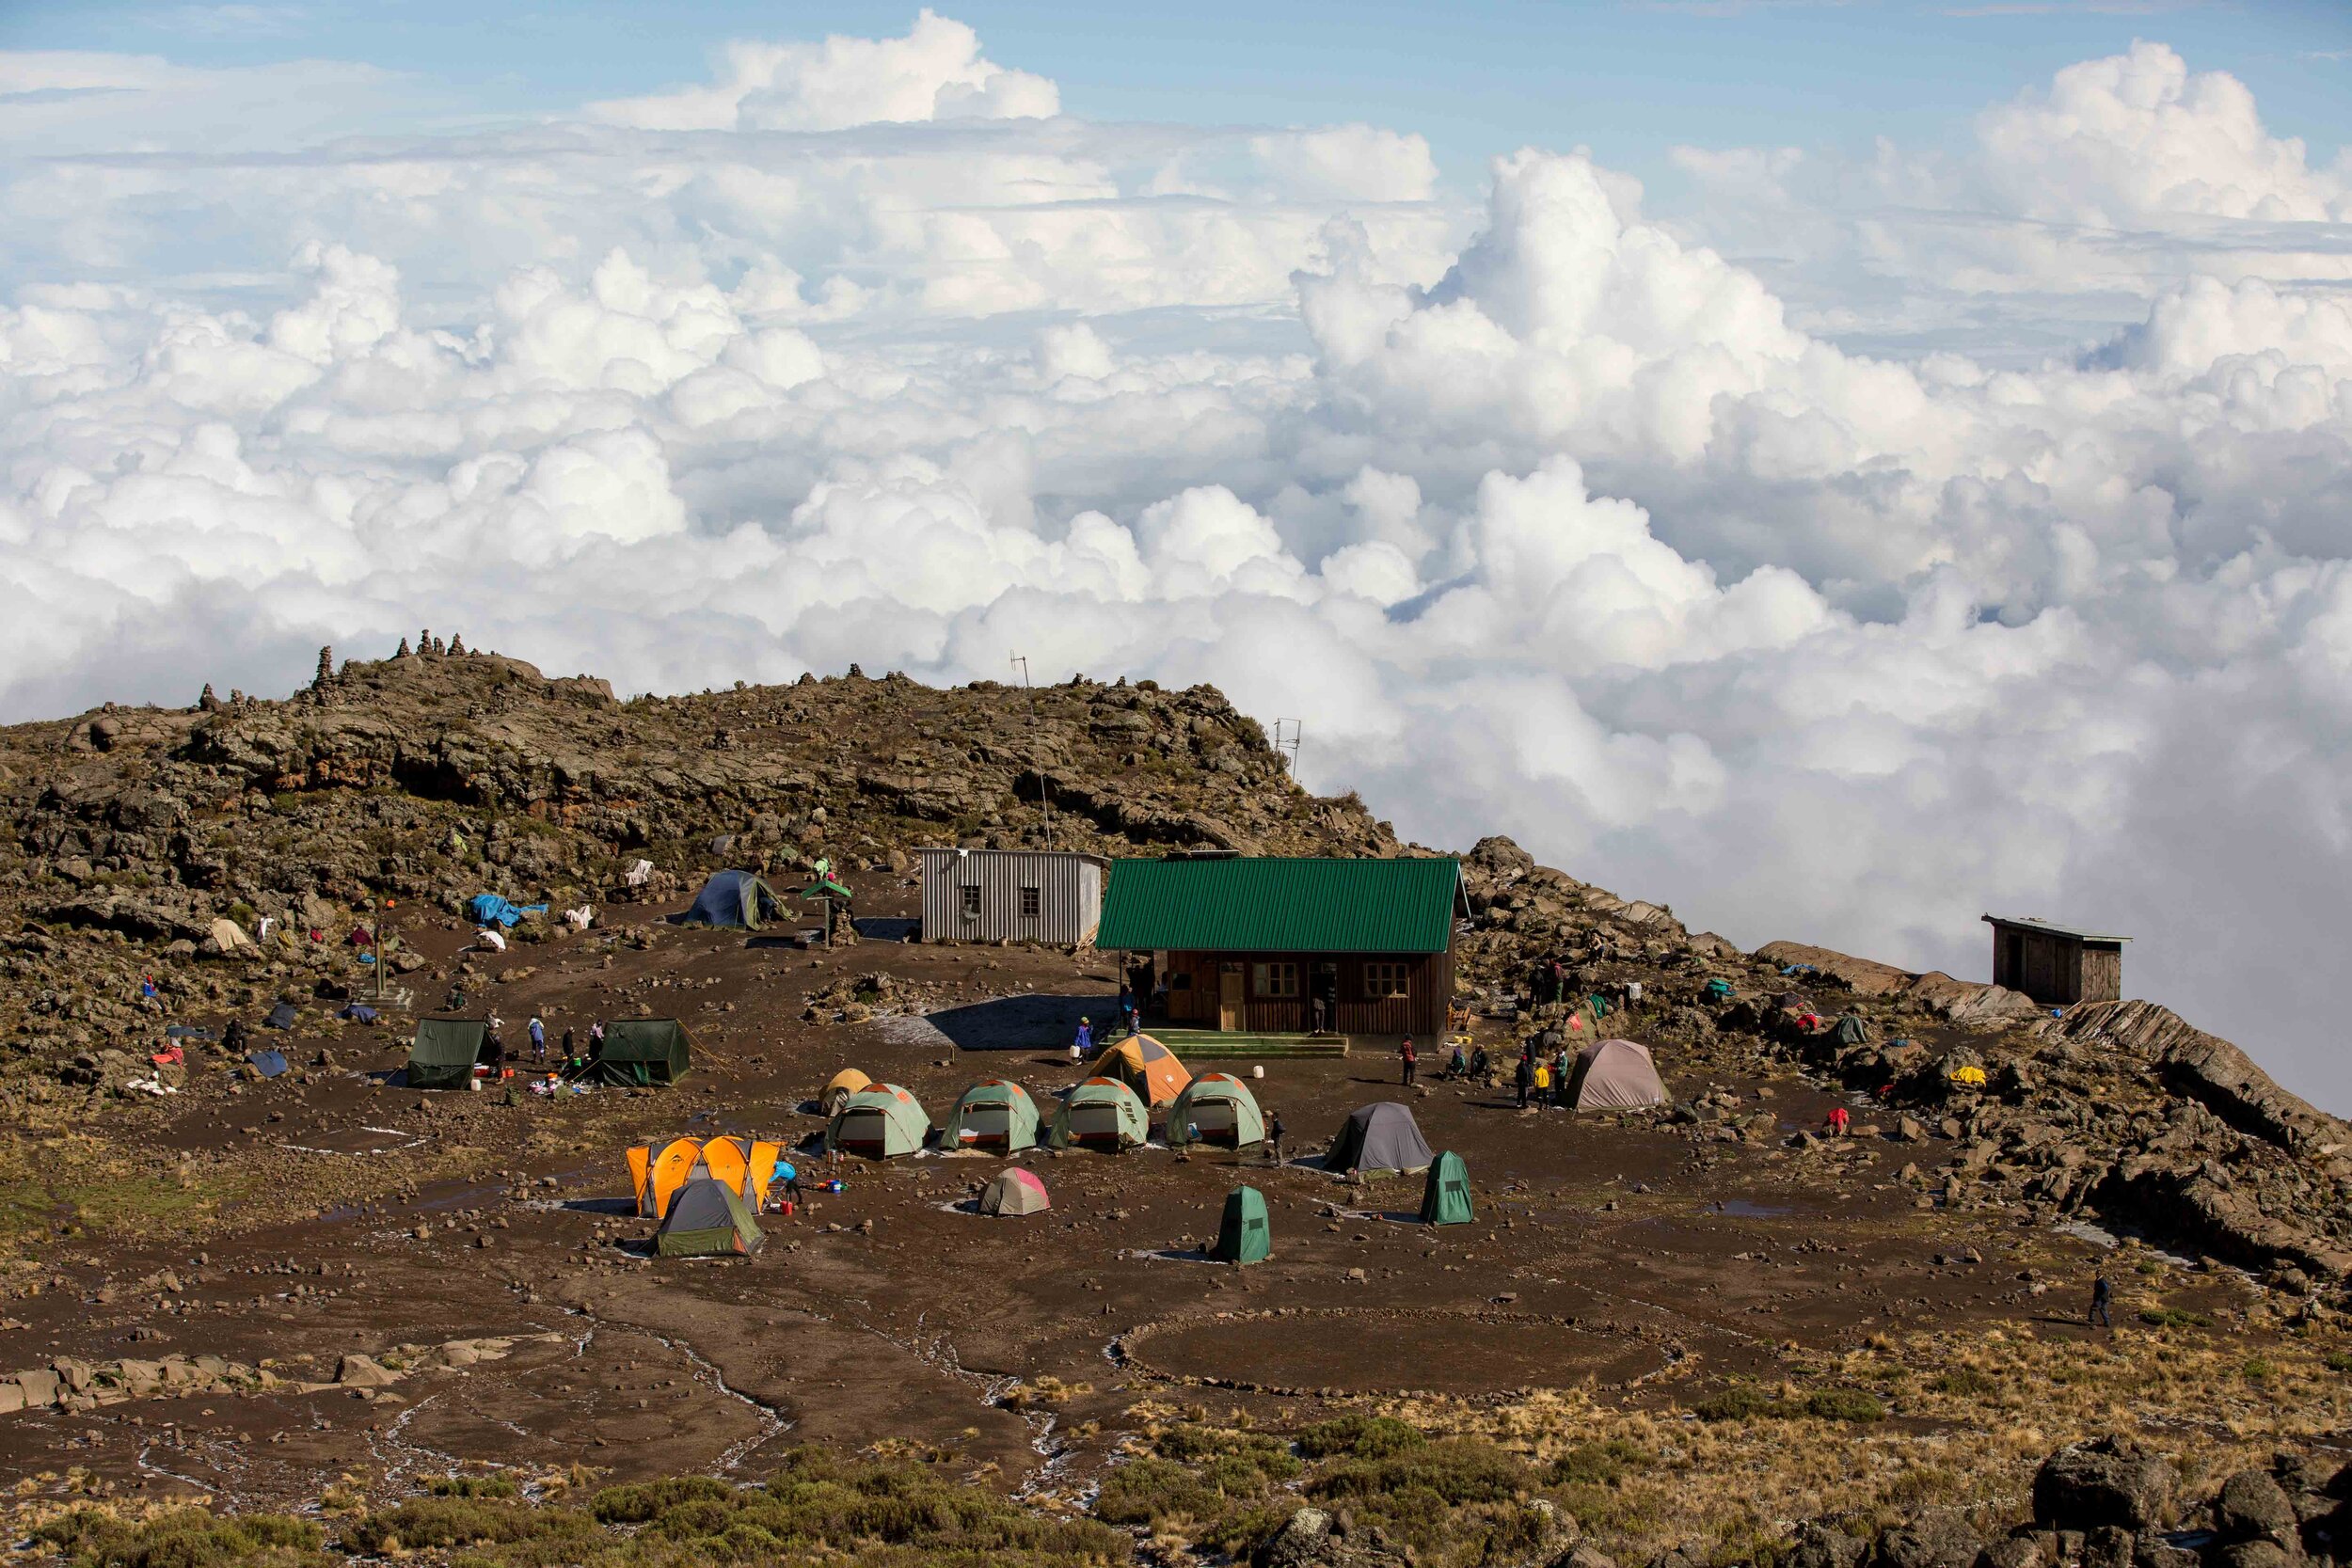 ajw_REI_Kilimanjaro-25.jpg